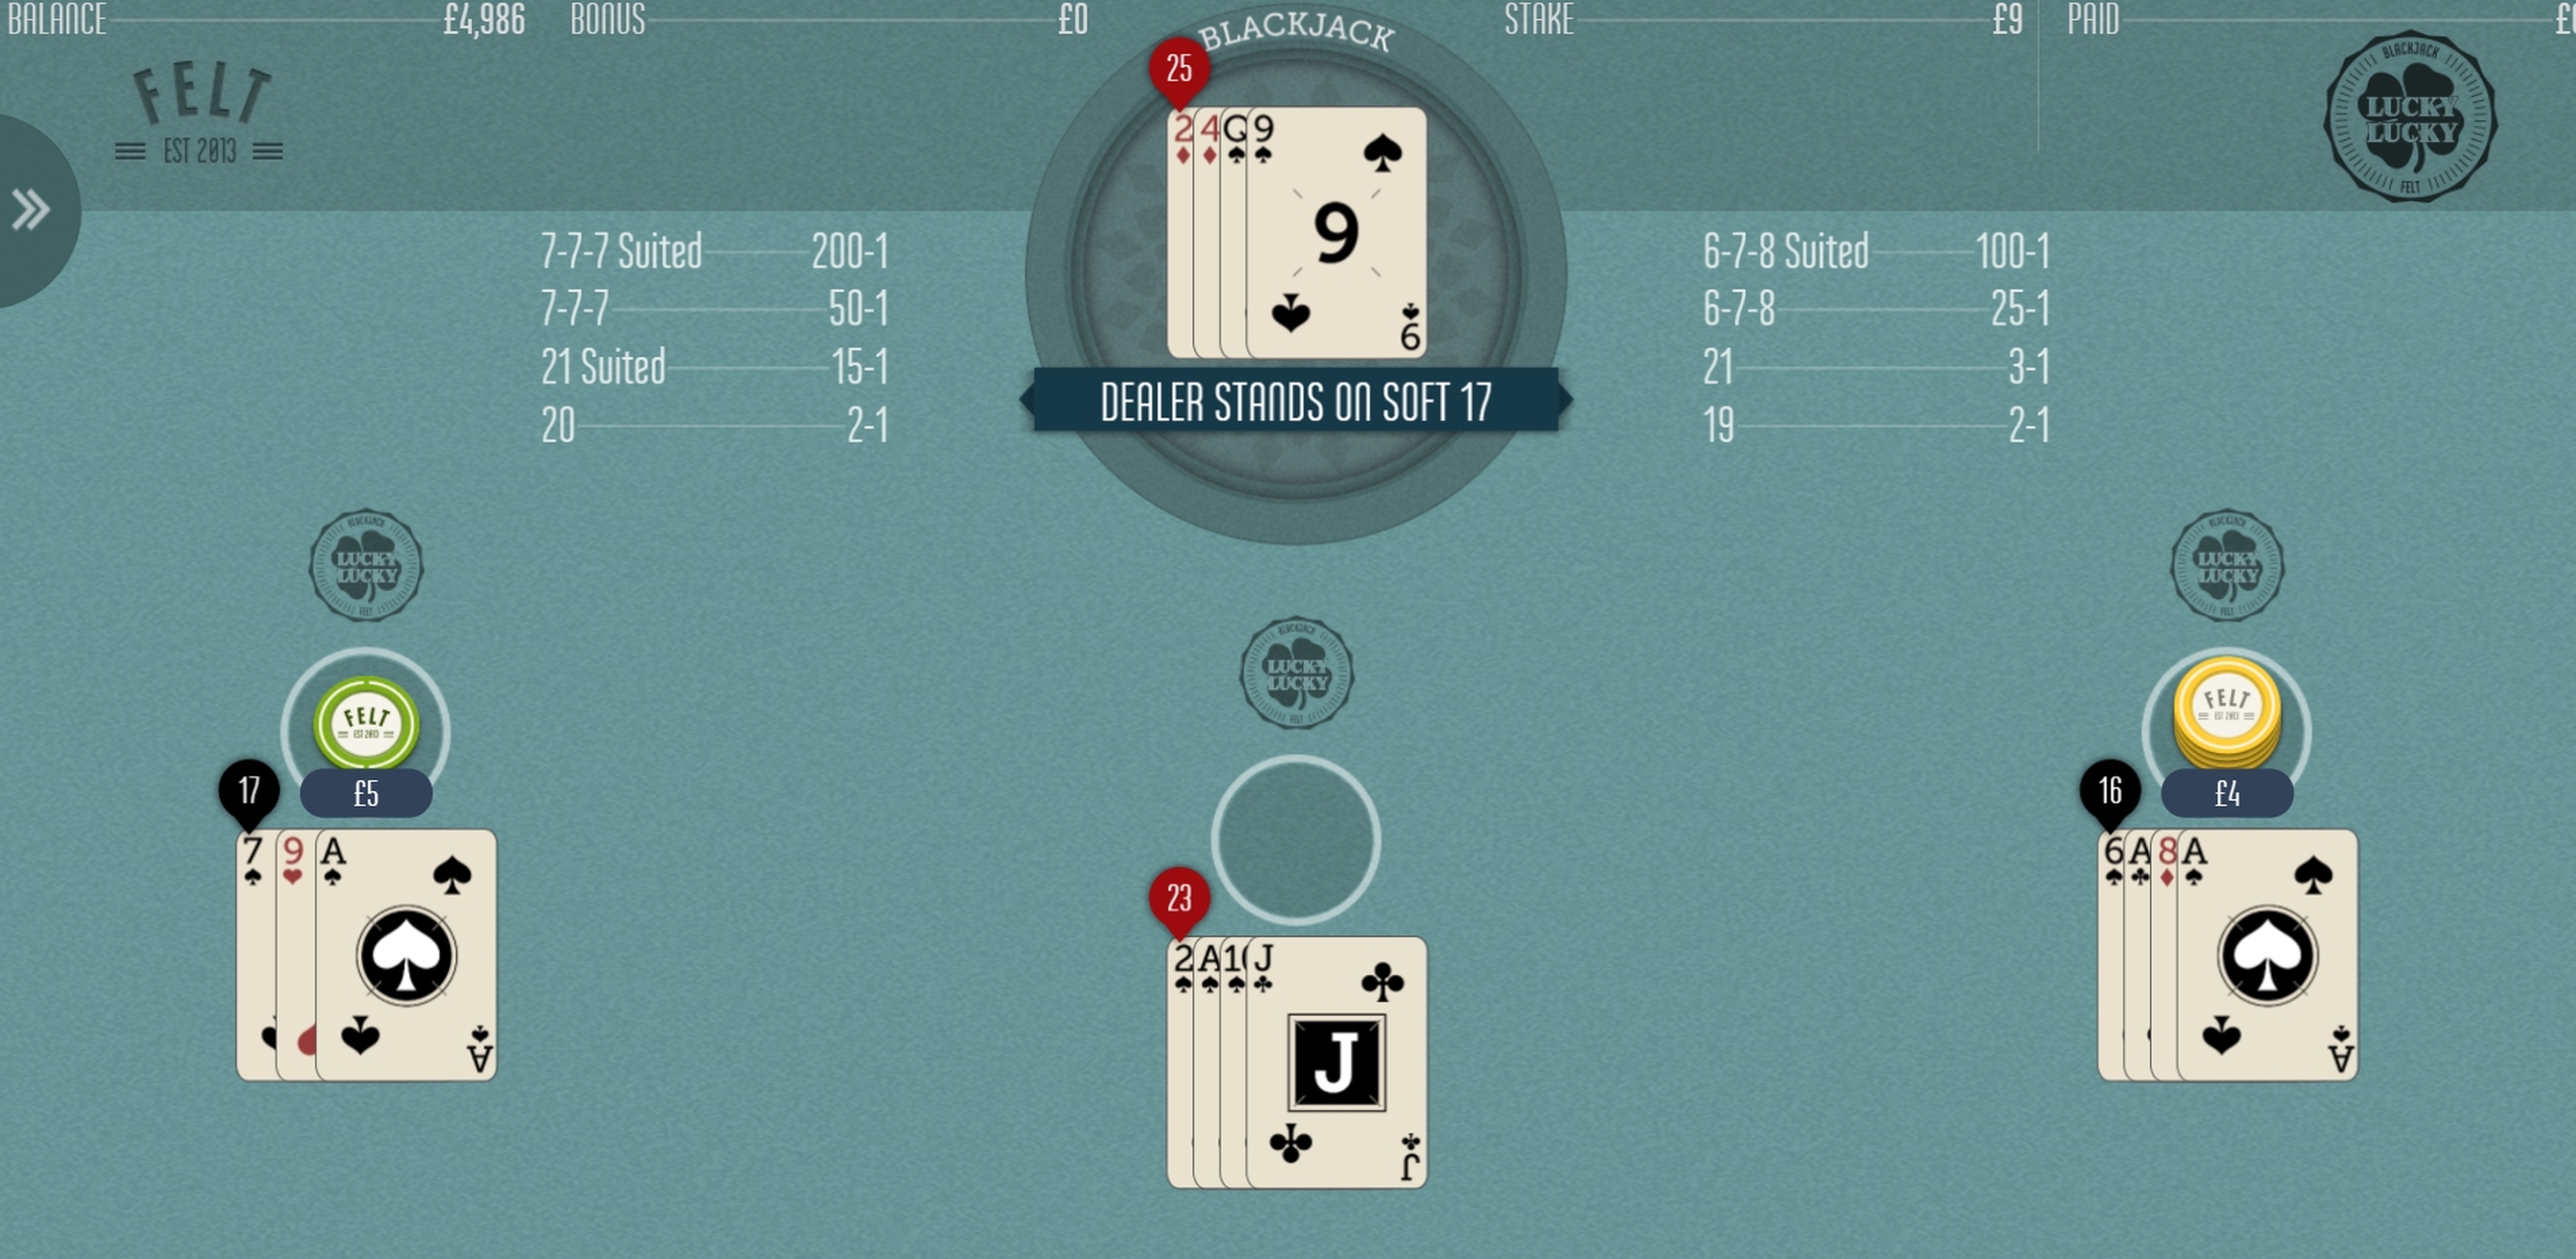 Win Money in Blackjack Lucky Lucky Free Slot Game by Felt